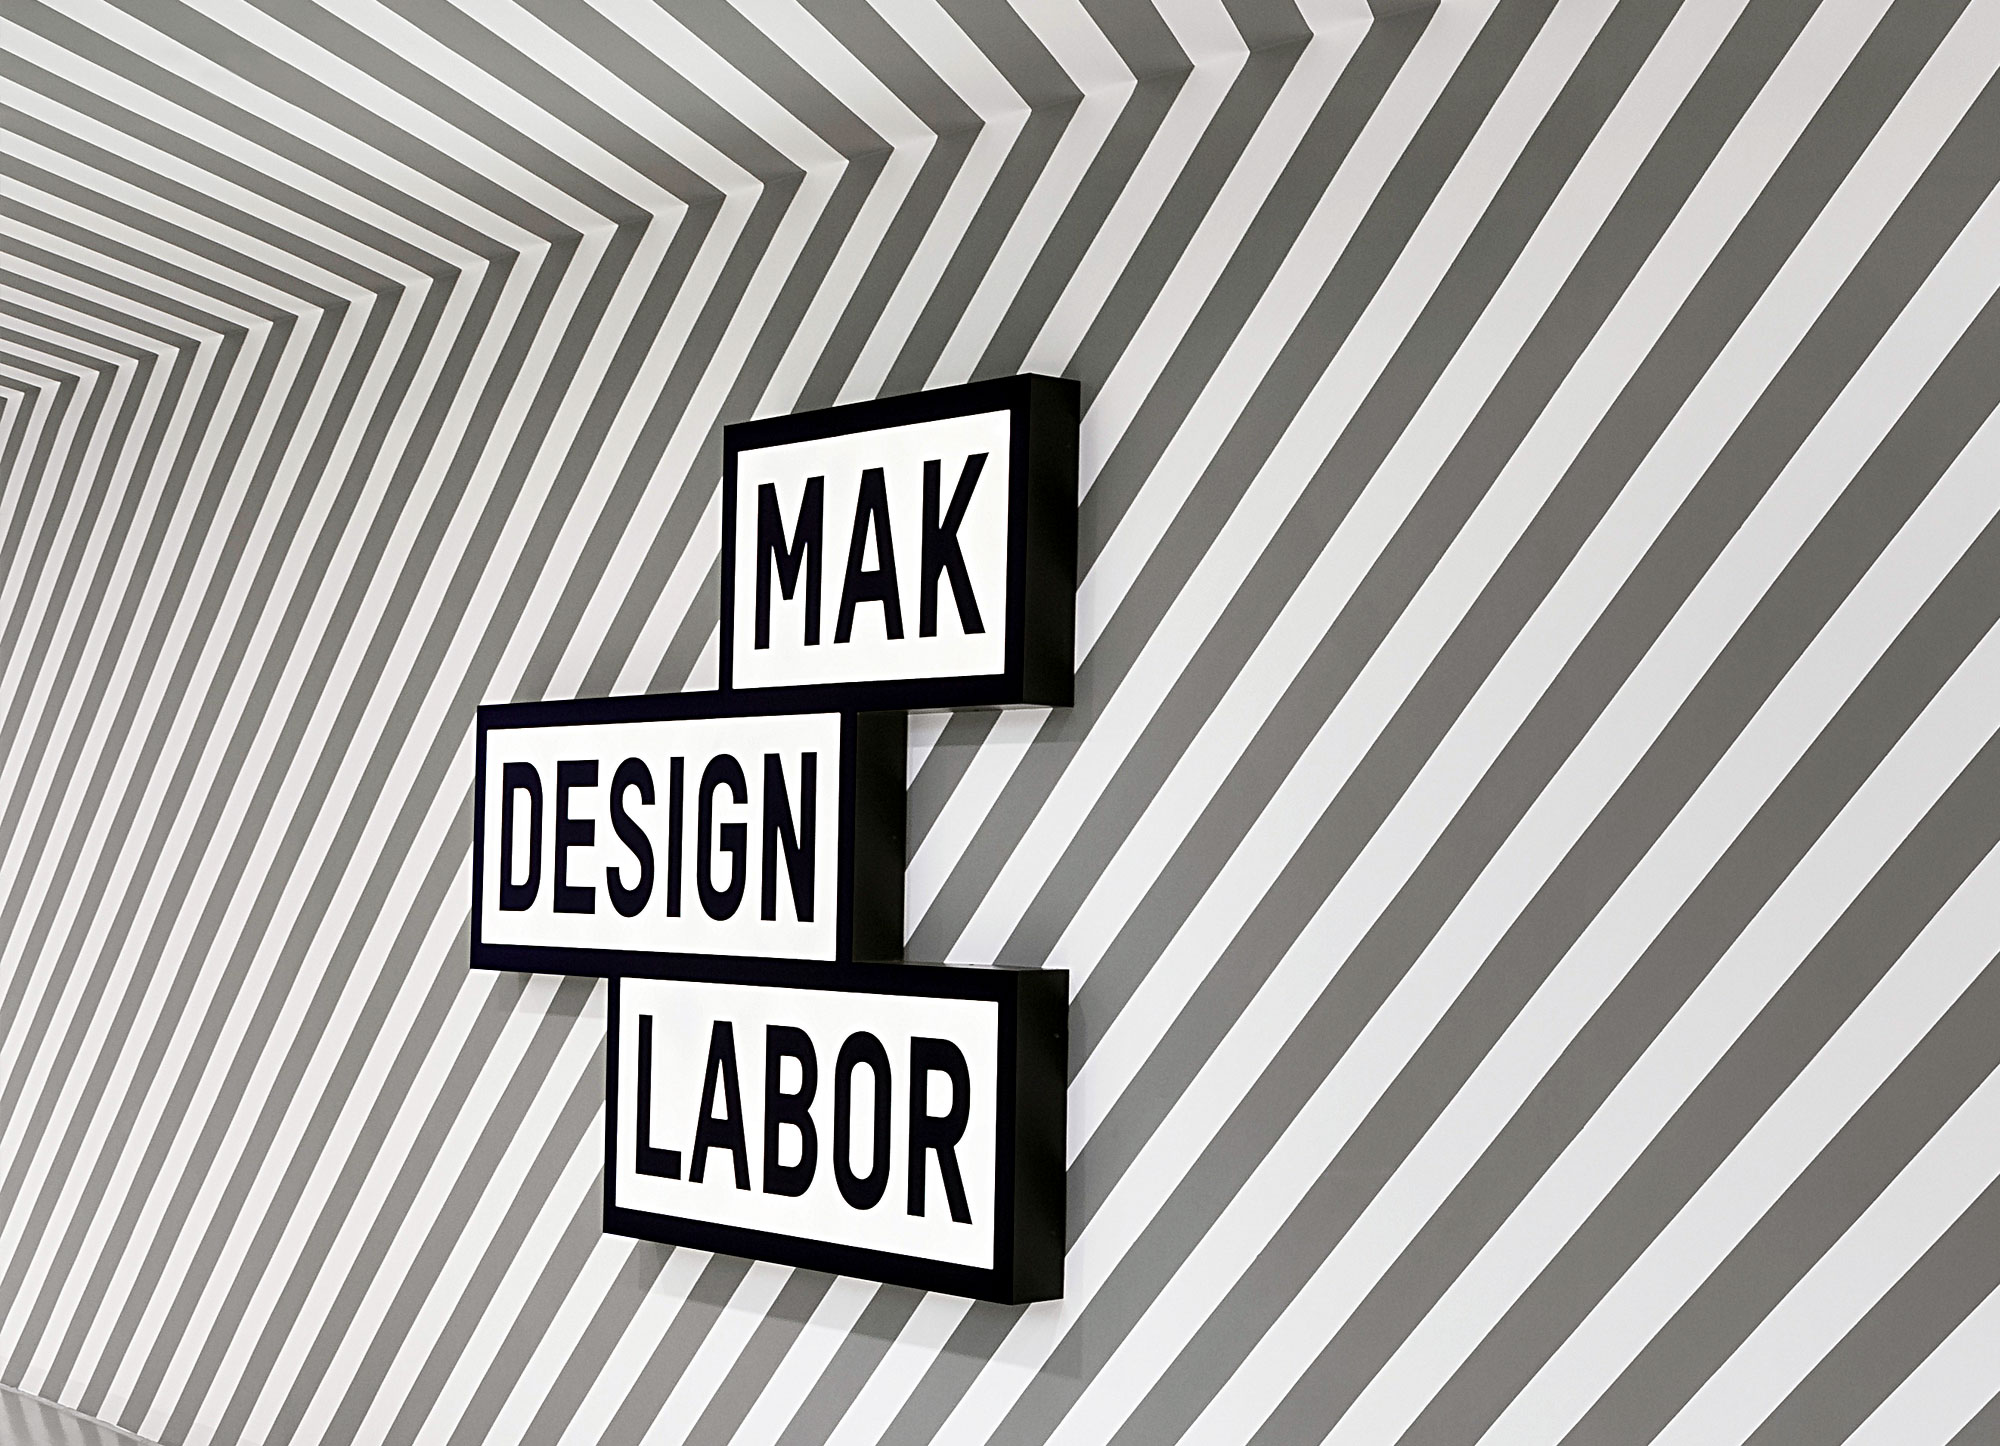 MAK Design Labor